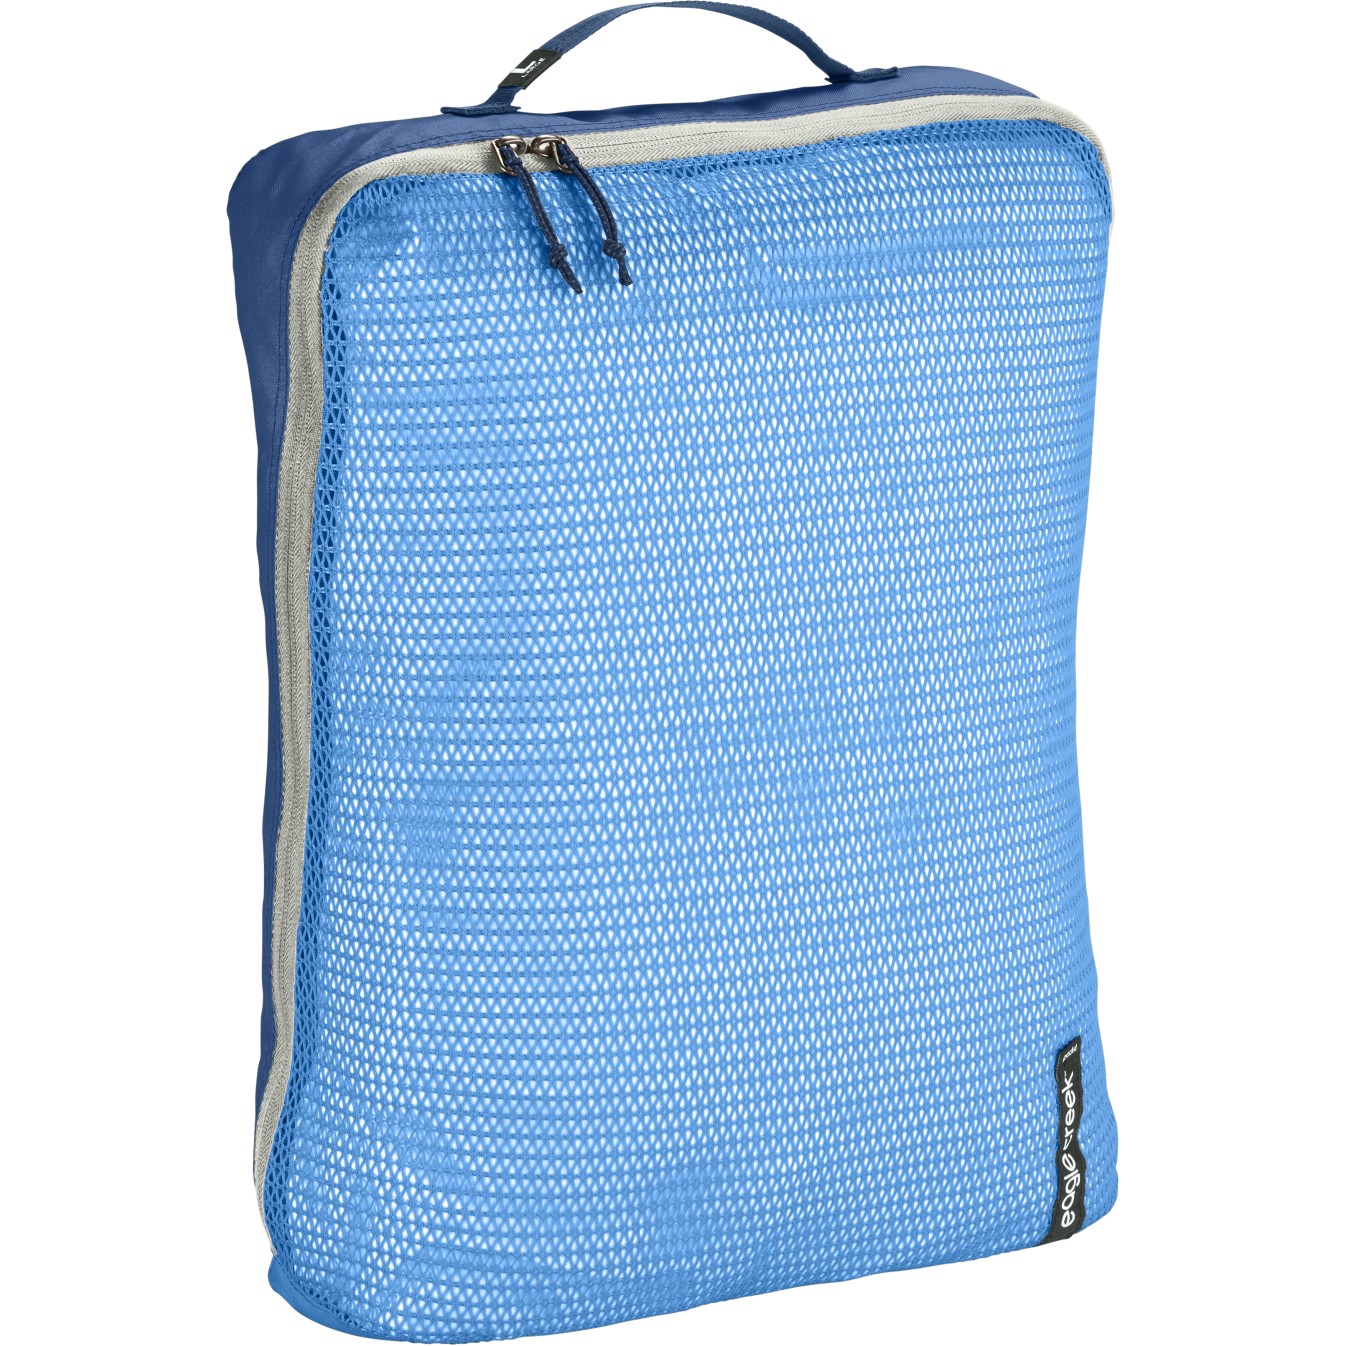 Productfoto van Eagle Creek Pack-It™ Reveal Cube L - Tas Organizer - aizome blue grey